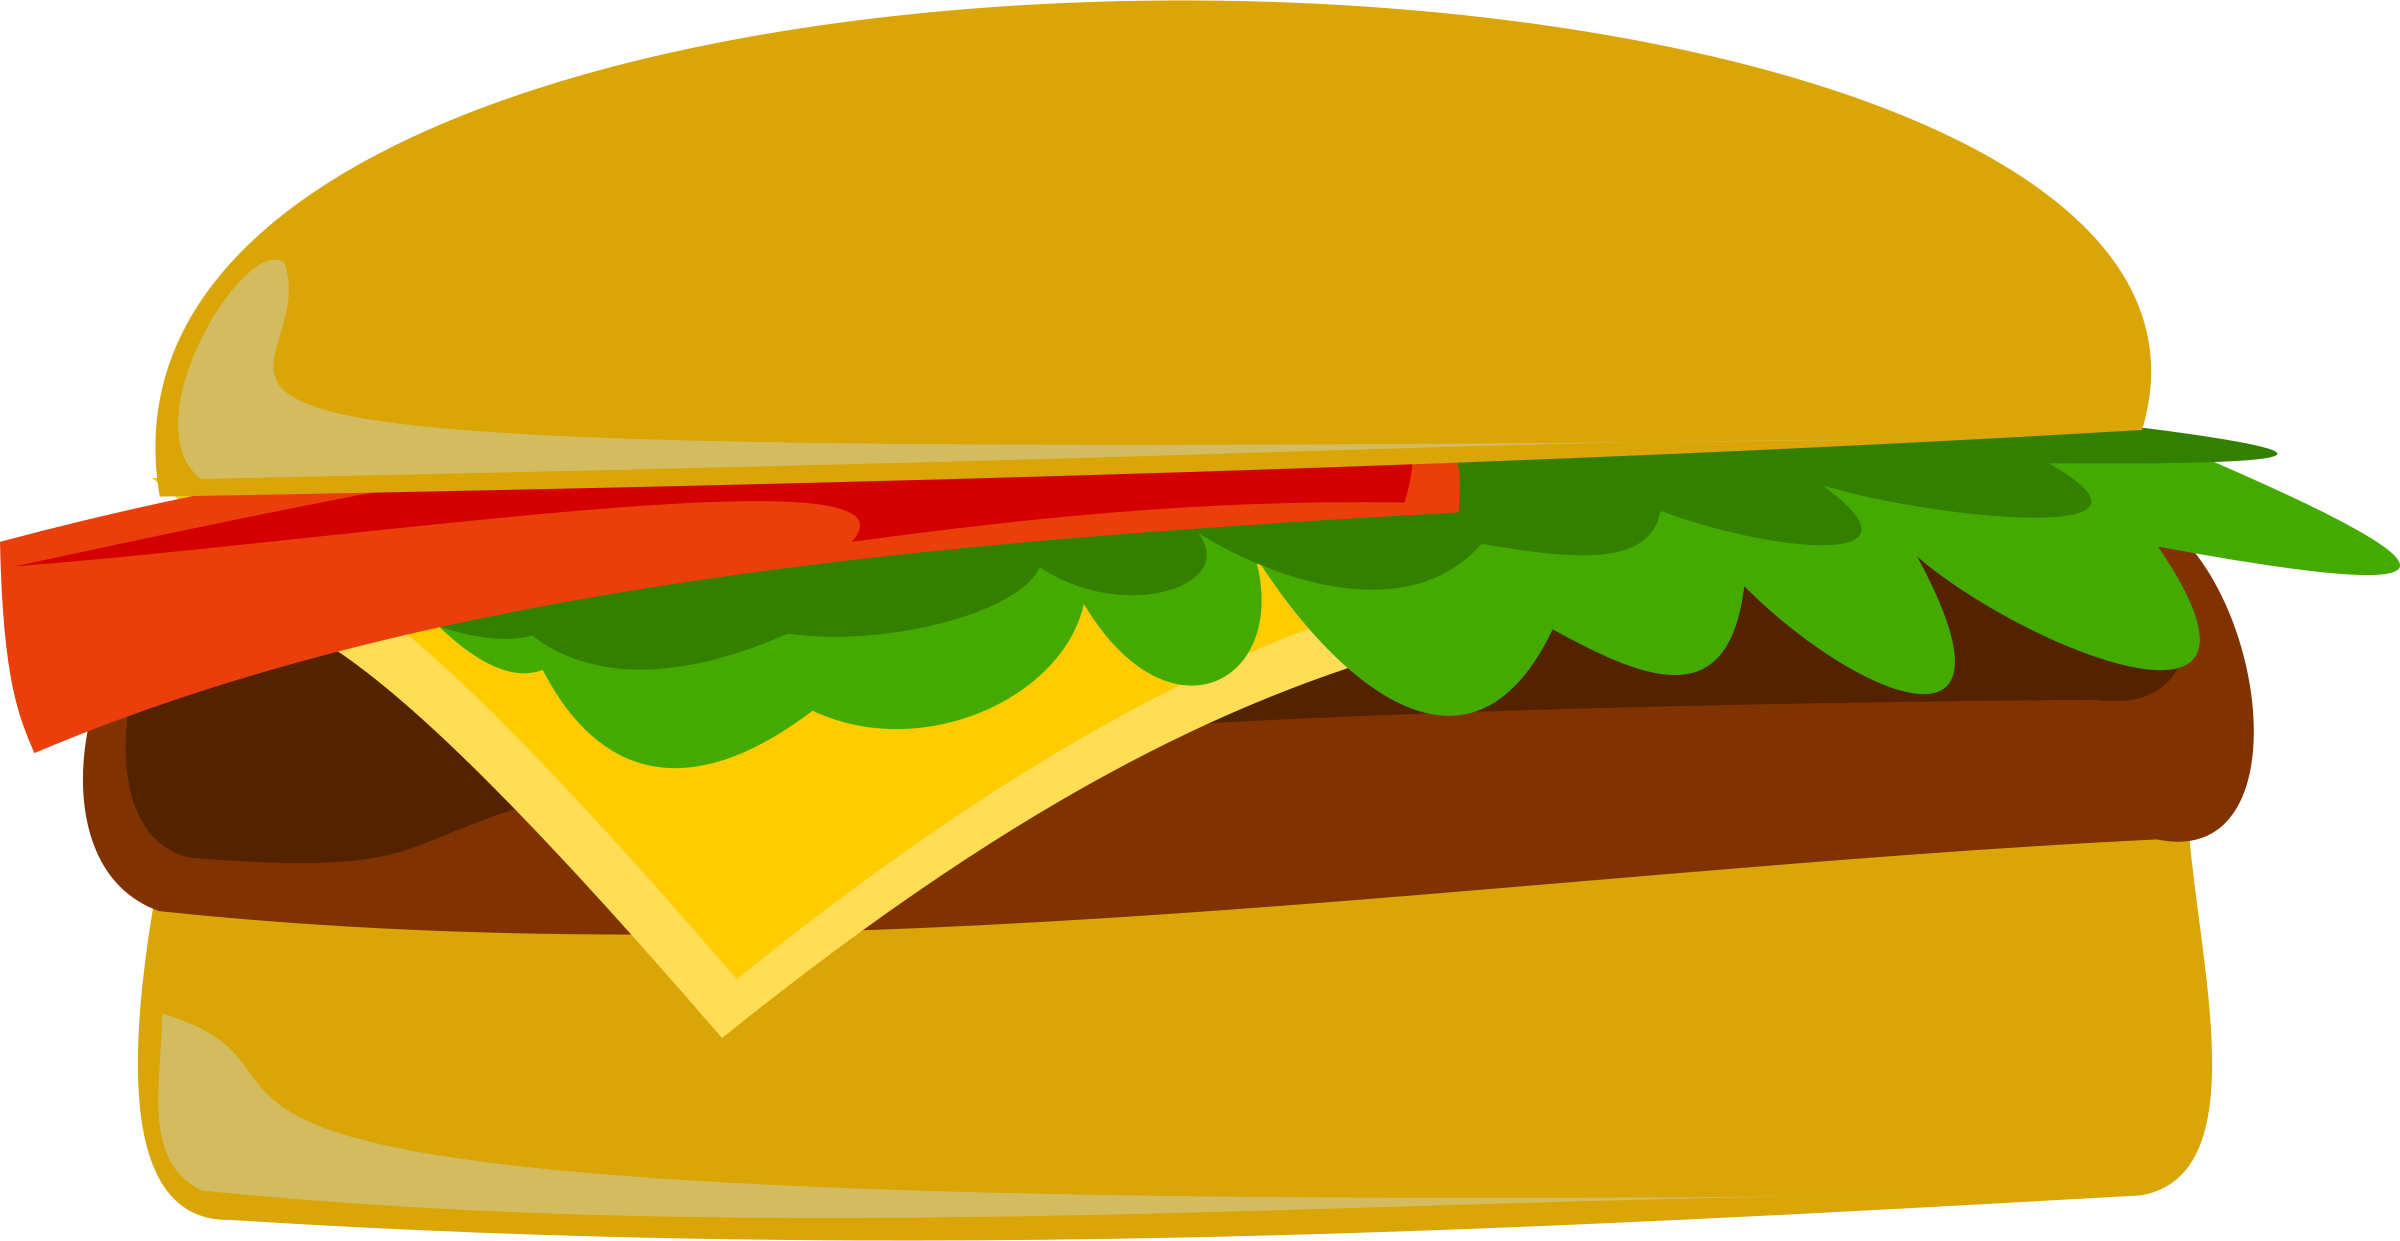 Hotdog and hamburger clipart free clipart images